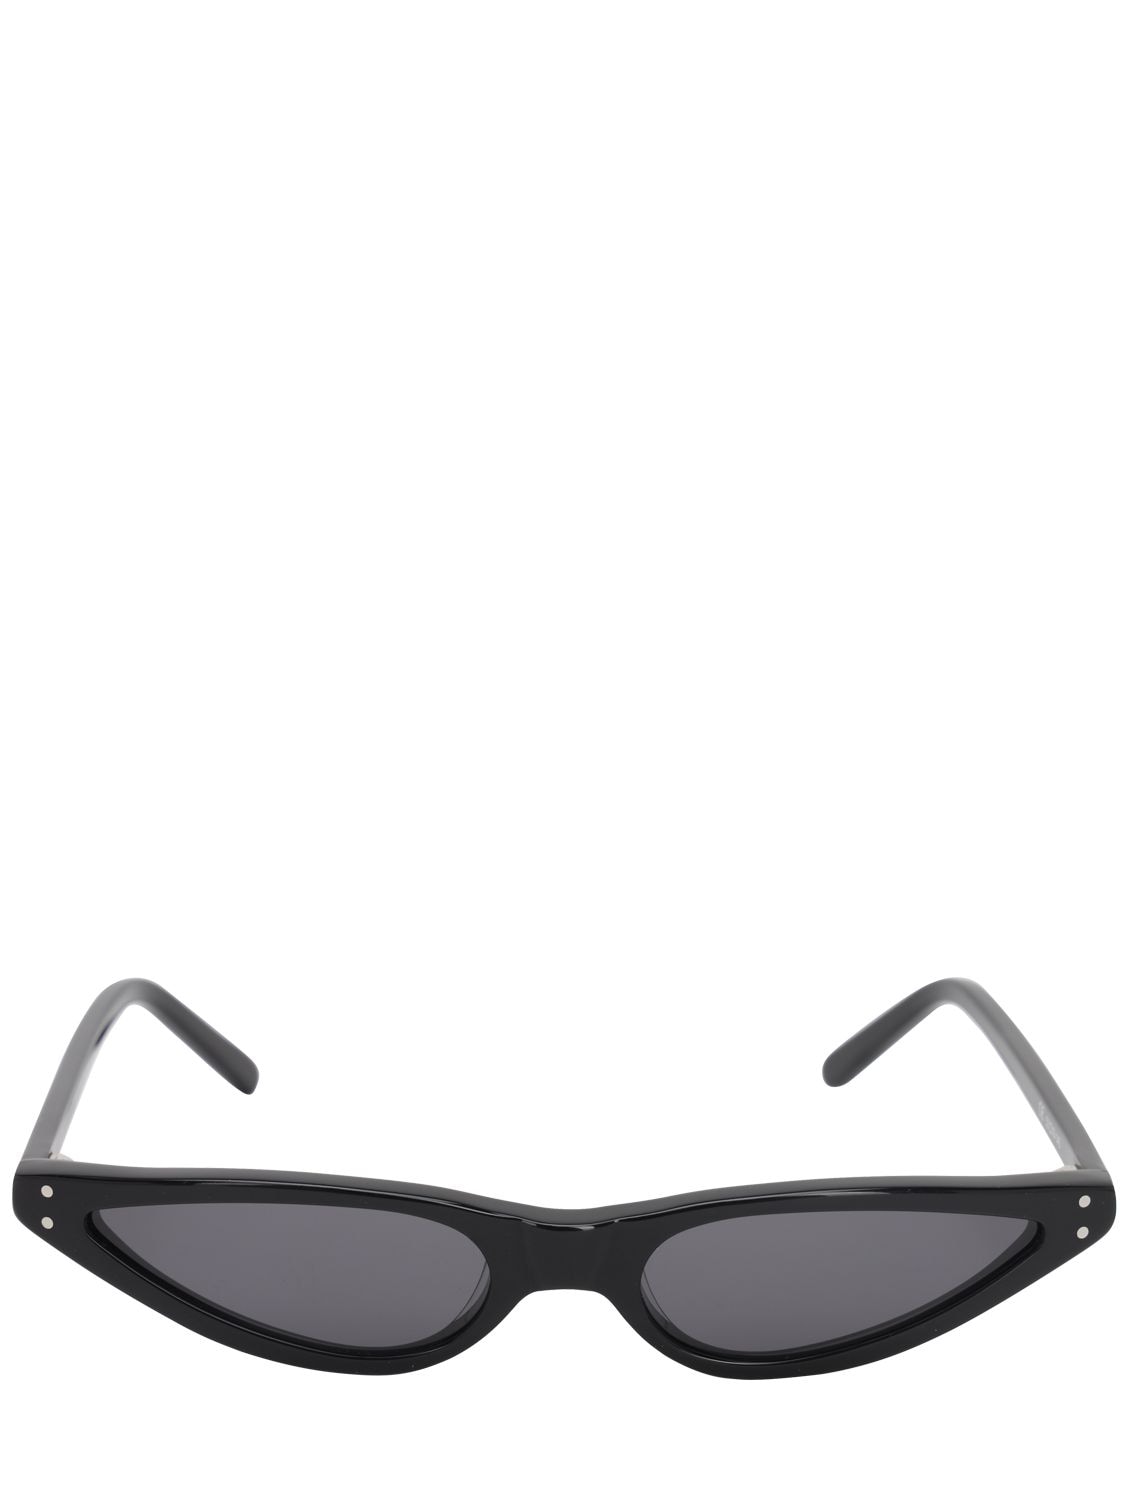 George Keburia Black Cat Eye Acetate Sunglasses